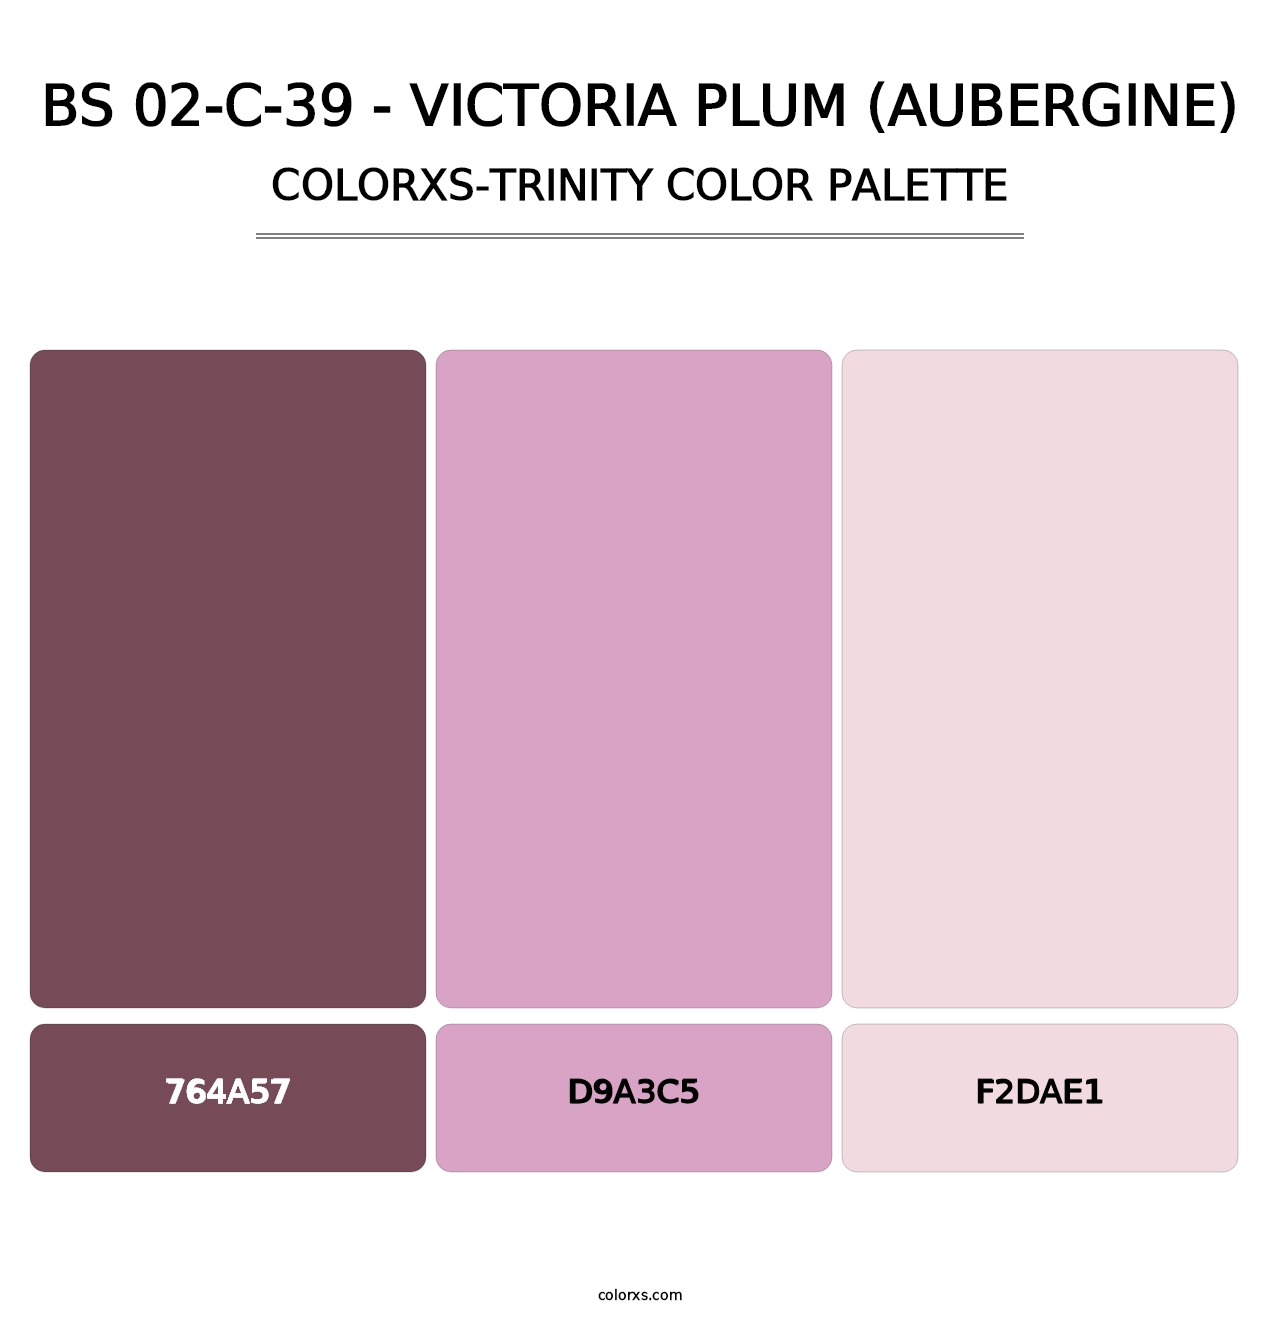 BS 02-C-39 - Victoria Plum (Aubergine) - Colorxs Trinity Palette